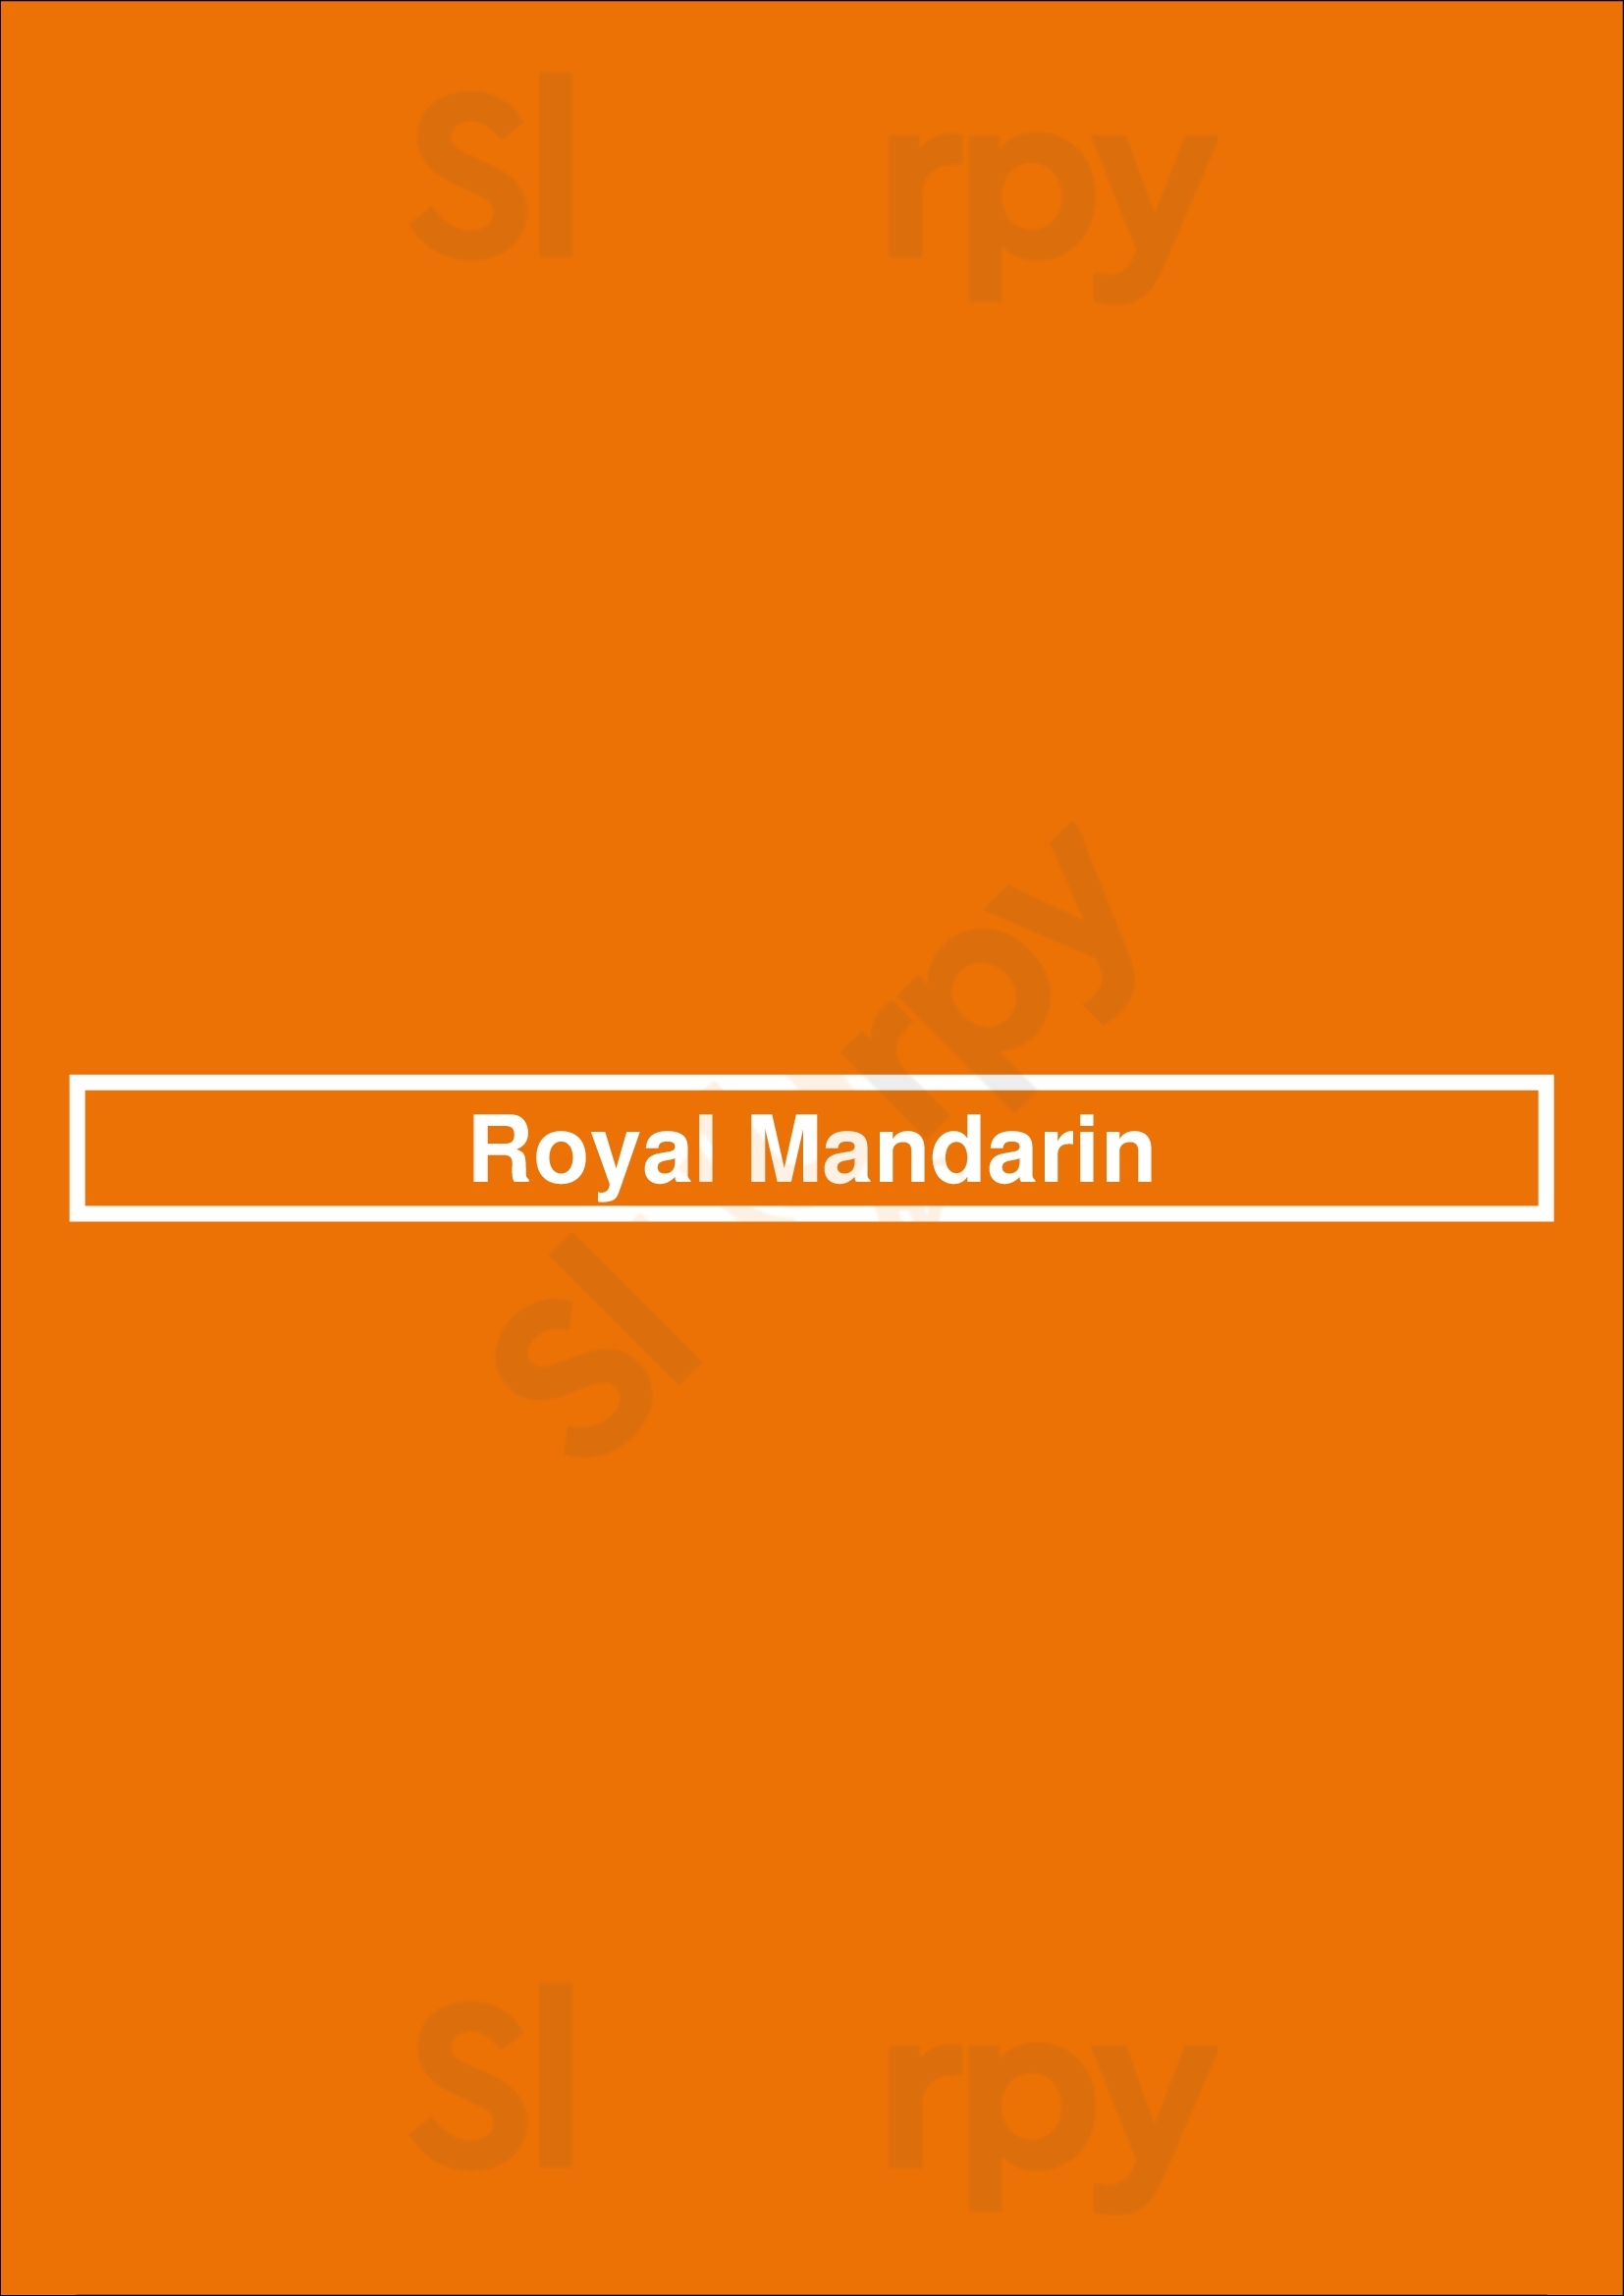 Royal Mandarin Hilversum Menu - 1